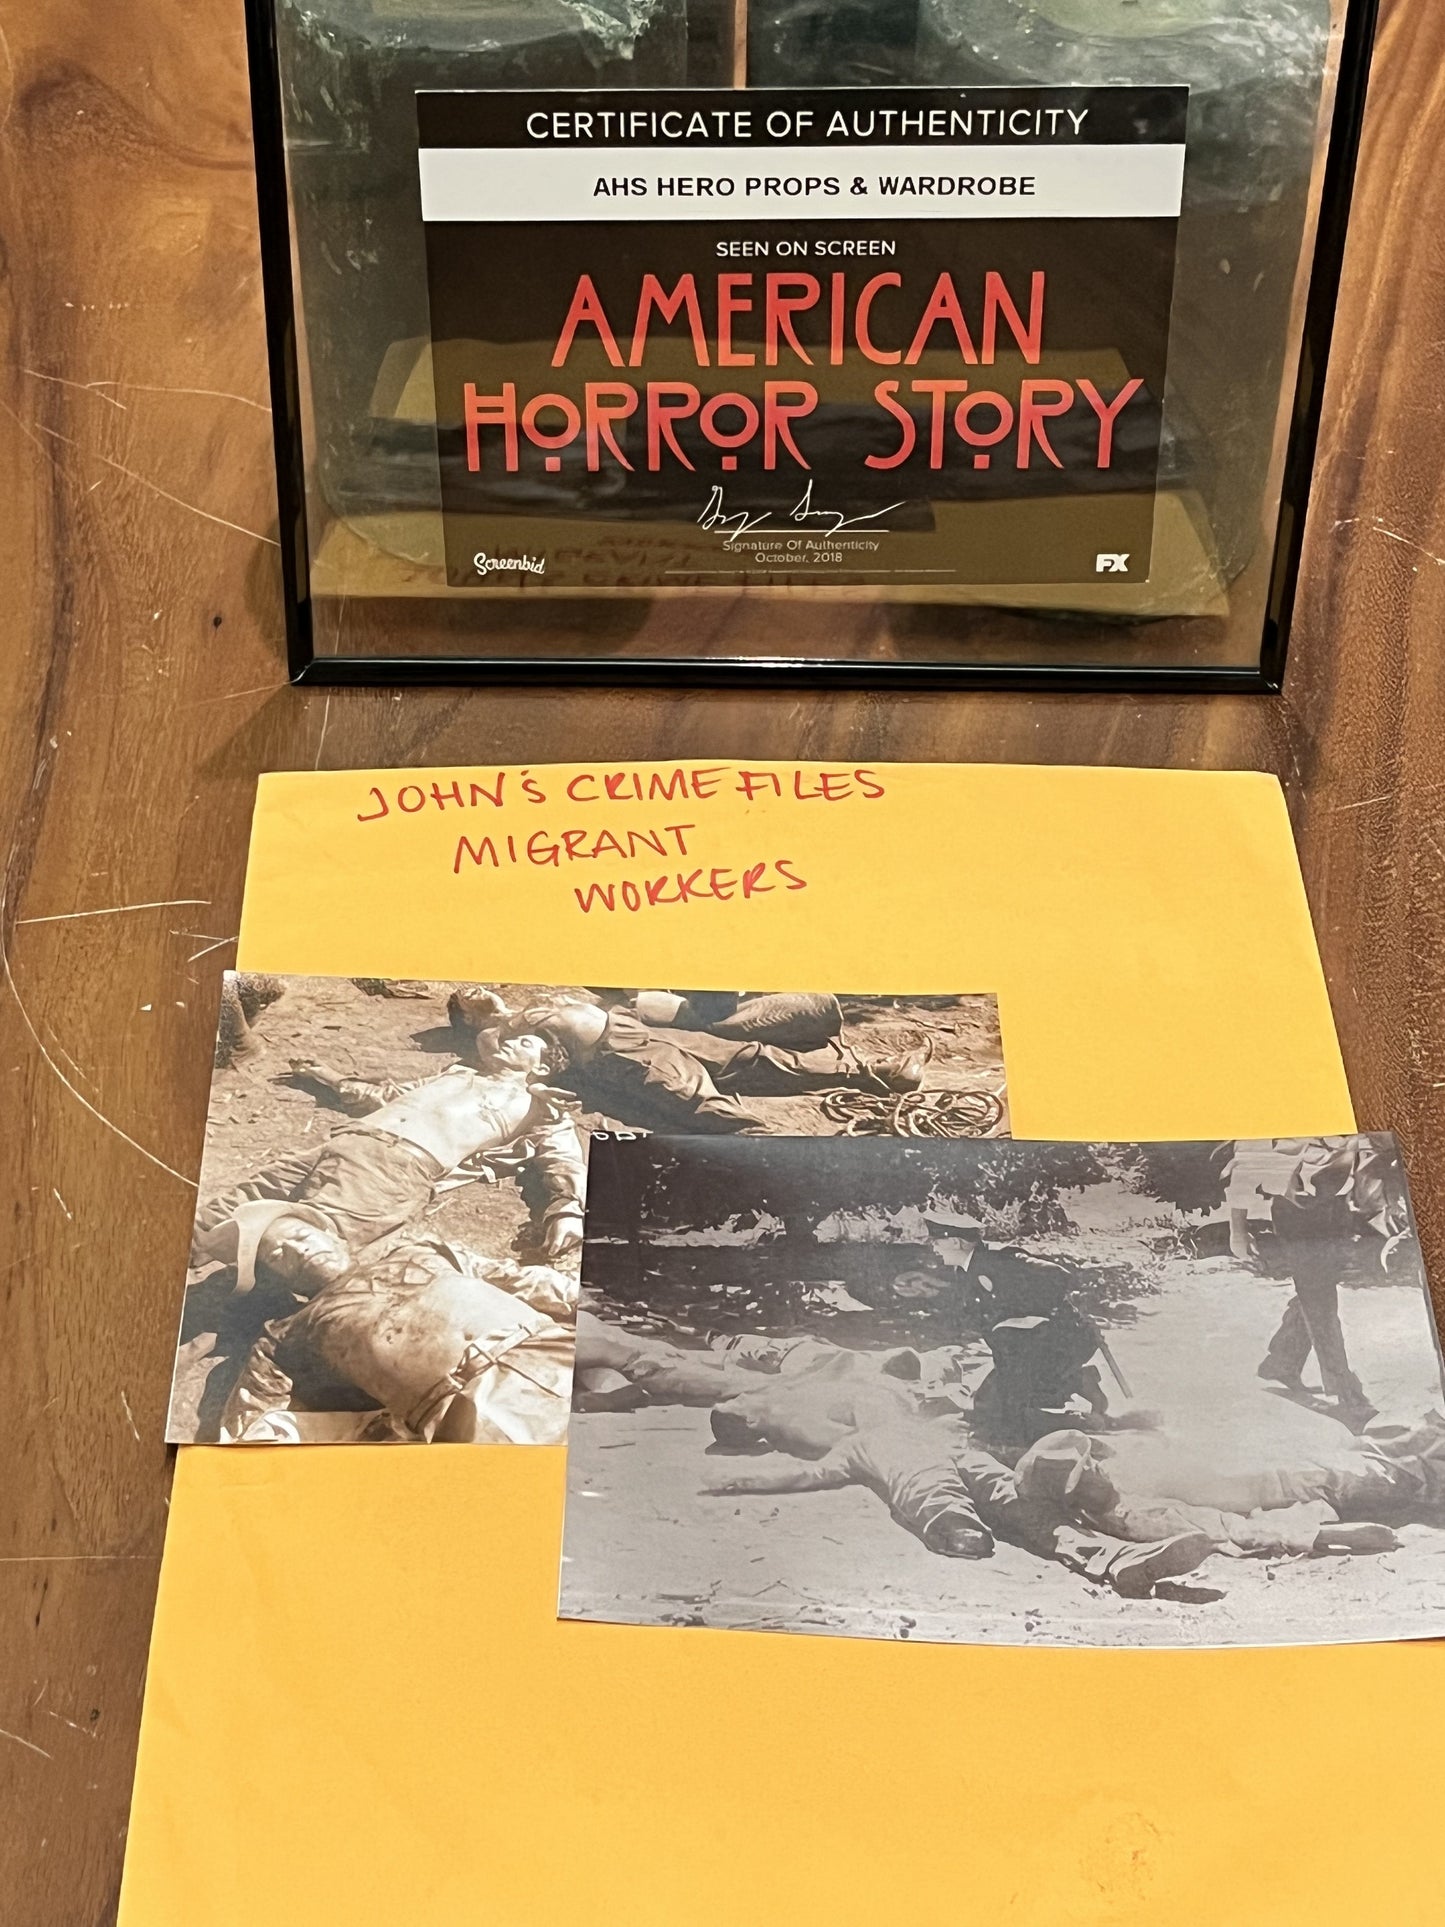 American Horror Story: John's Migrant Worker HERO Photos